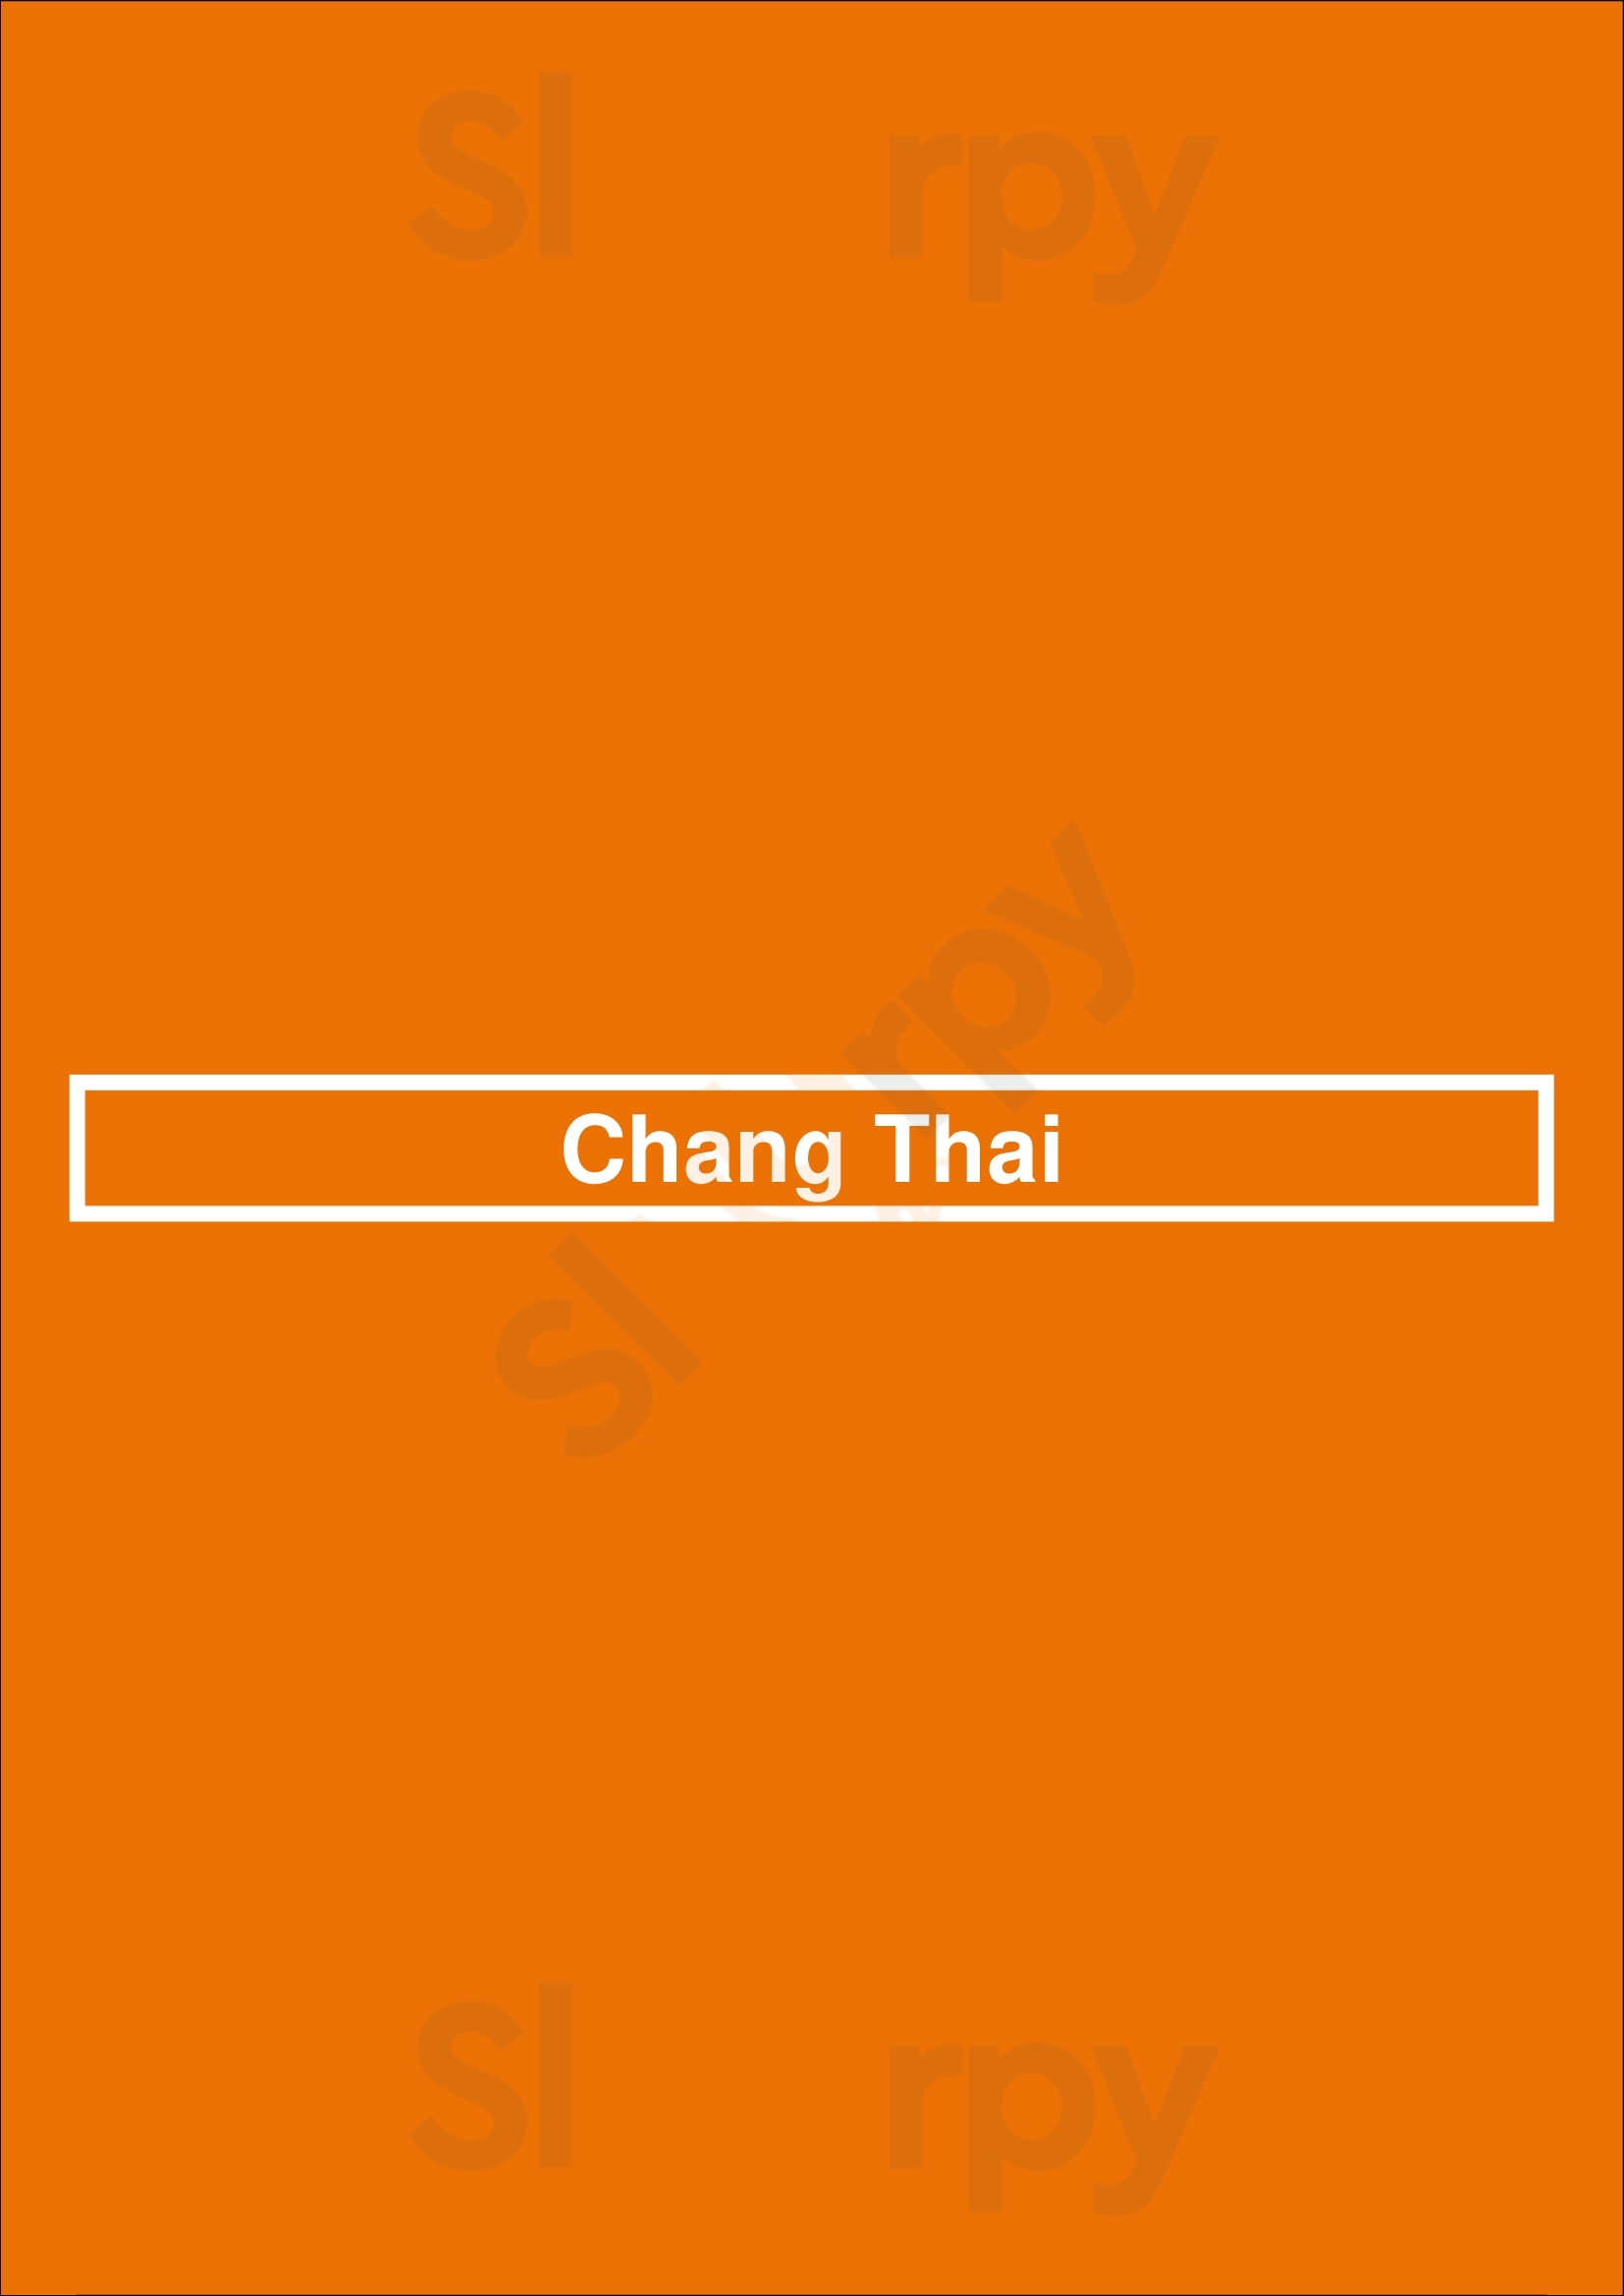 Chang Thai Bierges Menu - 1